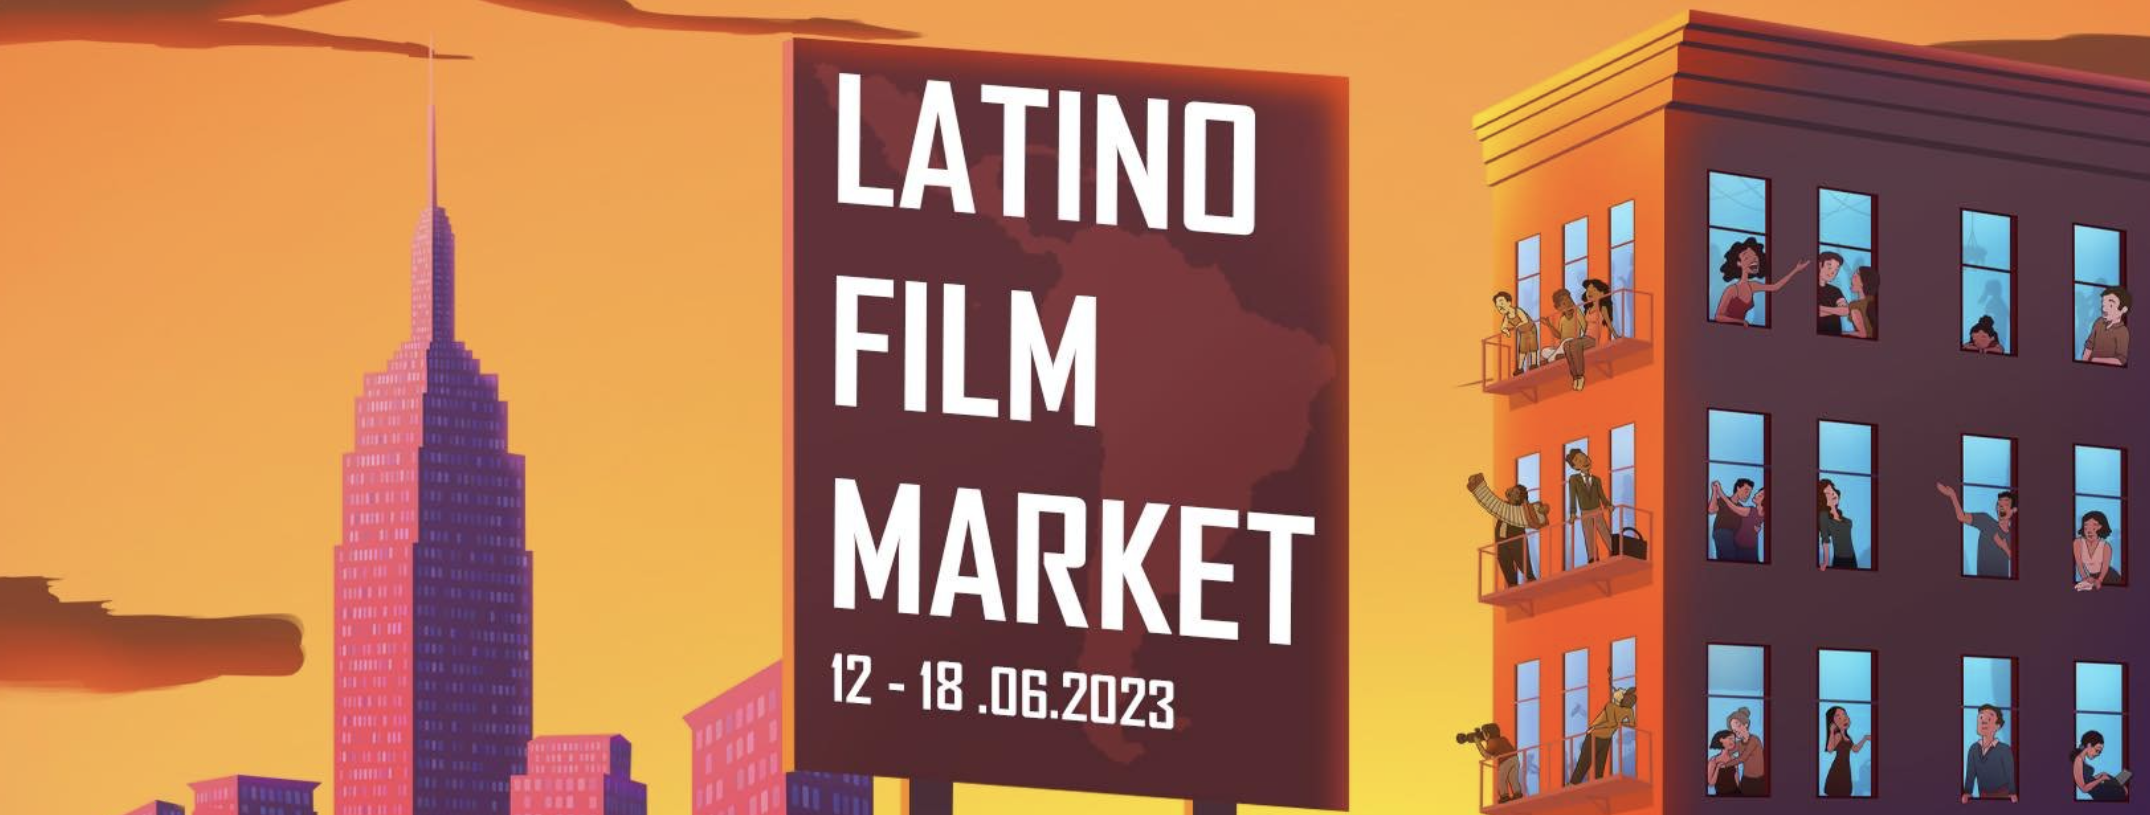 Latino Film Market 2023